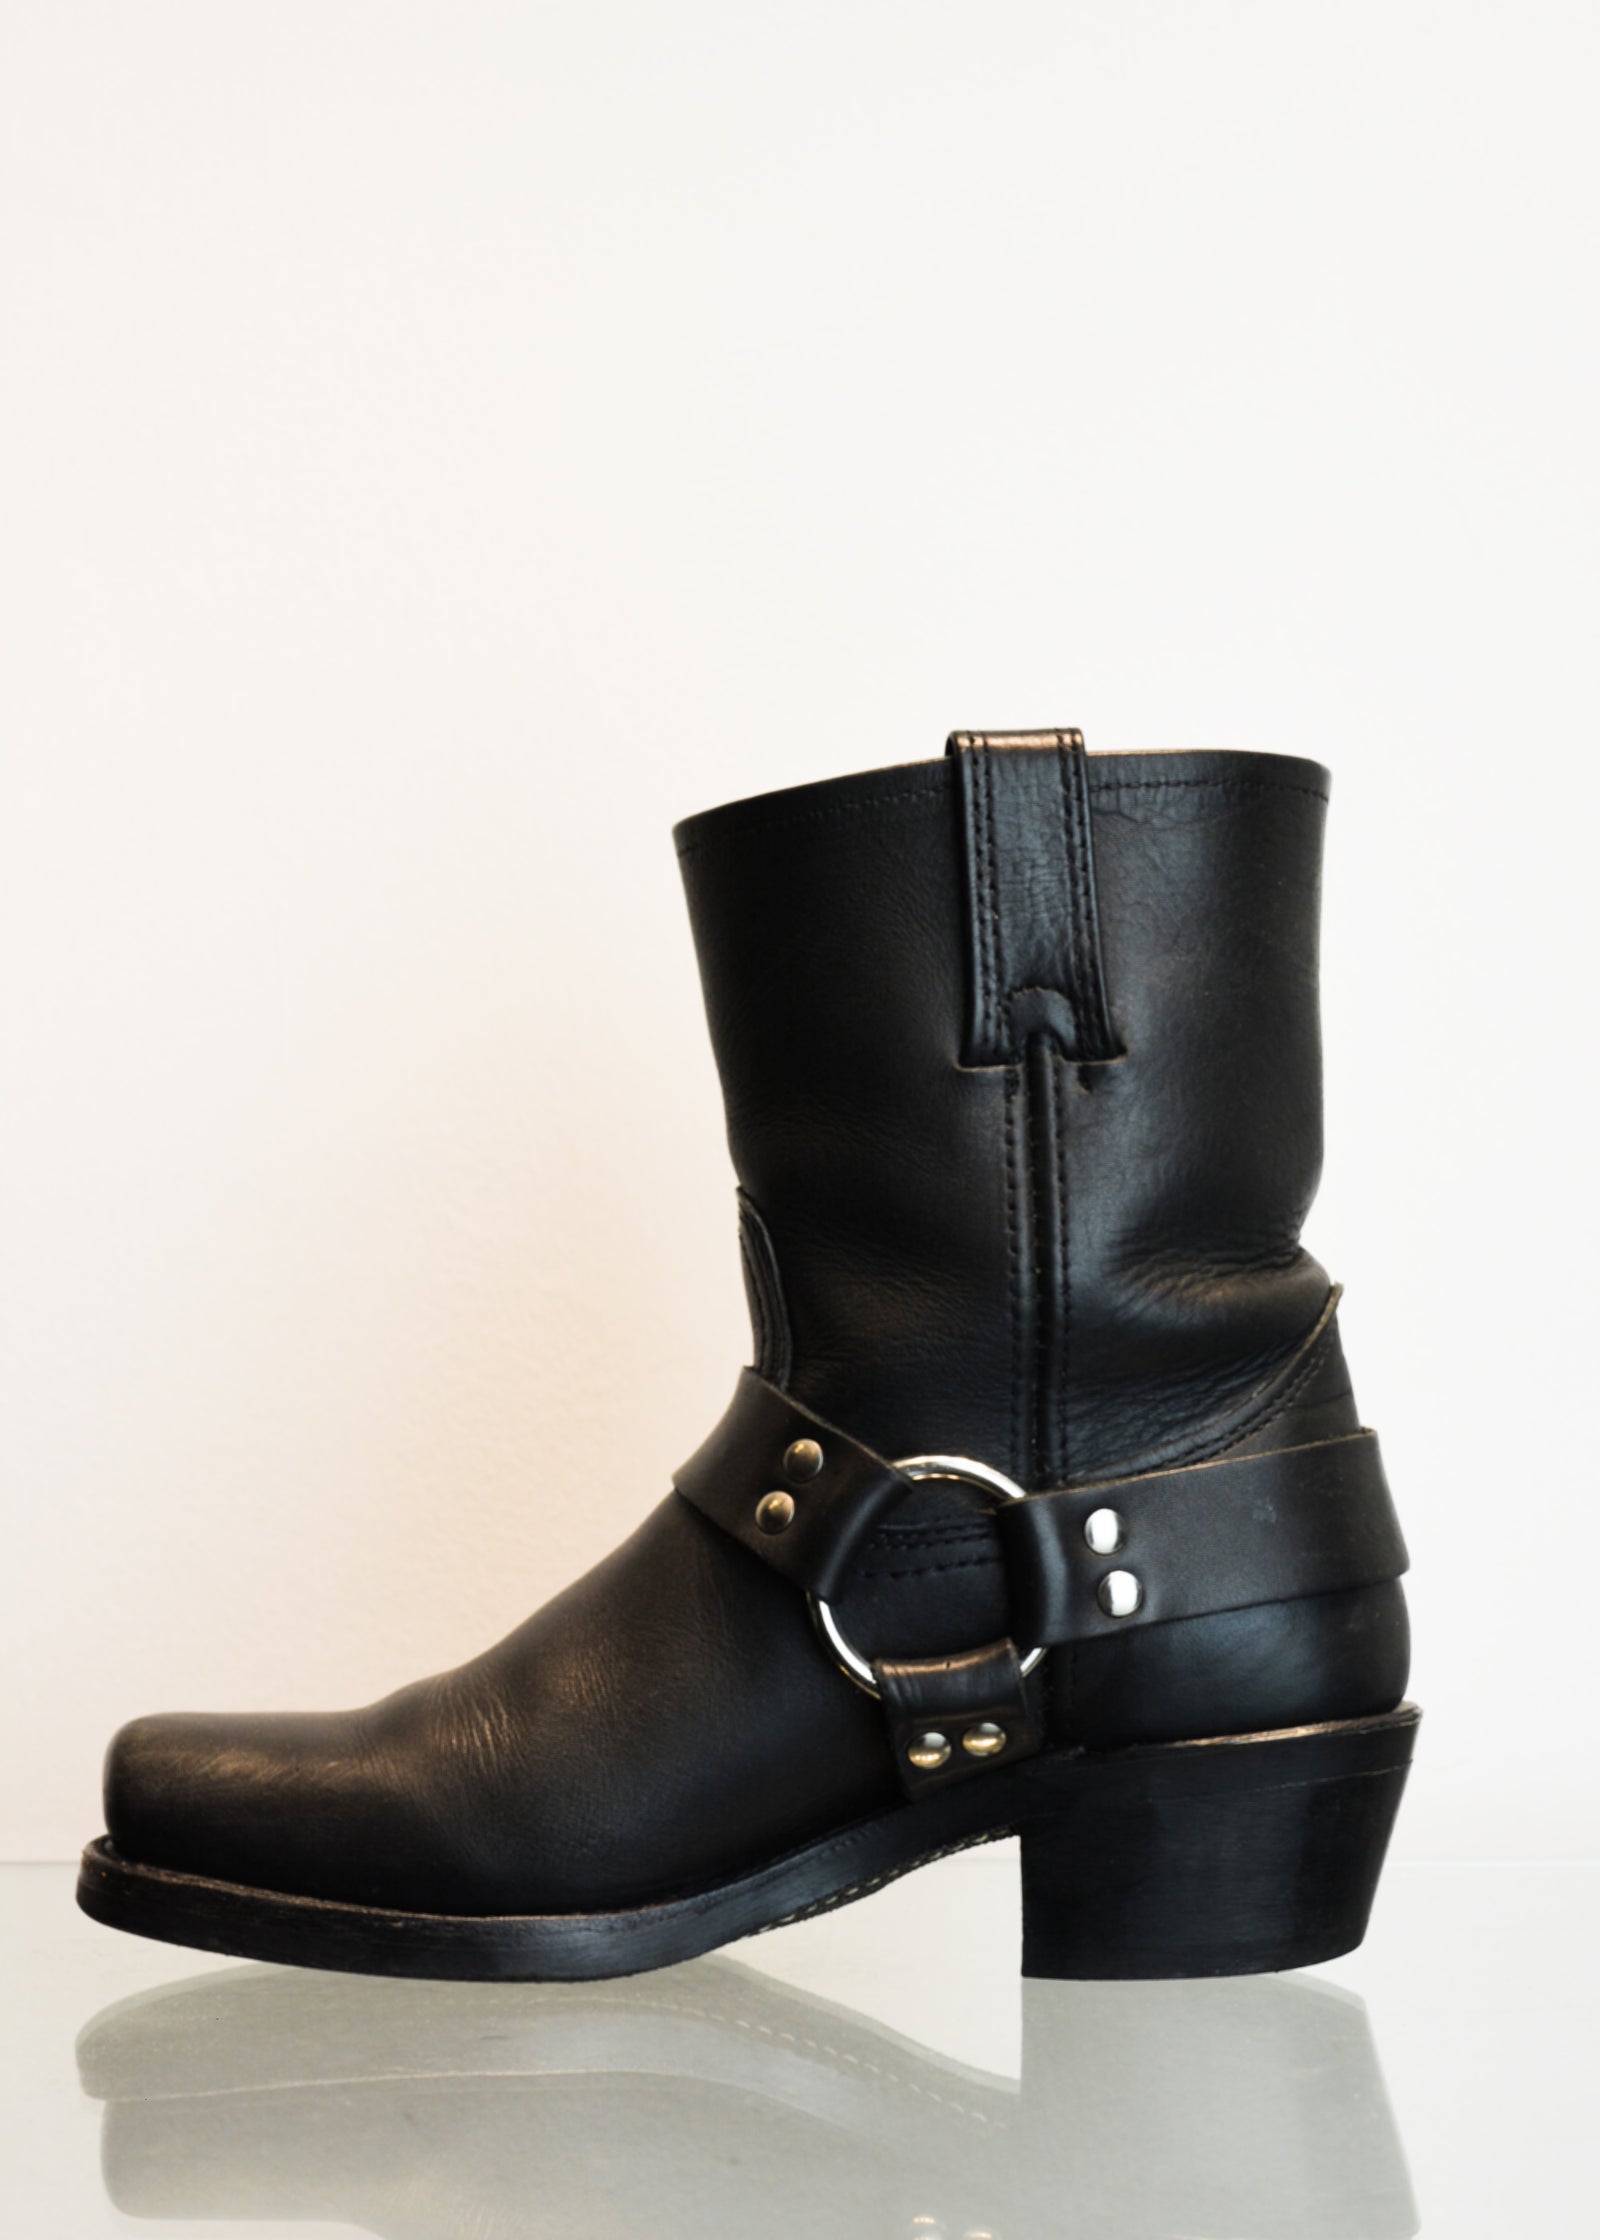 PREWORN | Preloved - 'FRYE' Harness 8R Boot - Size 4 UK